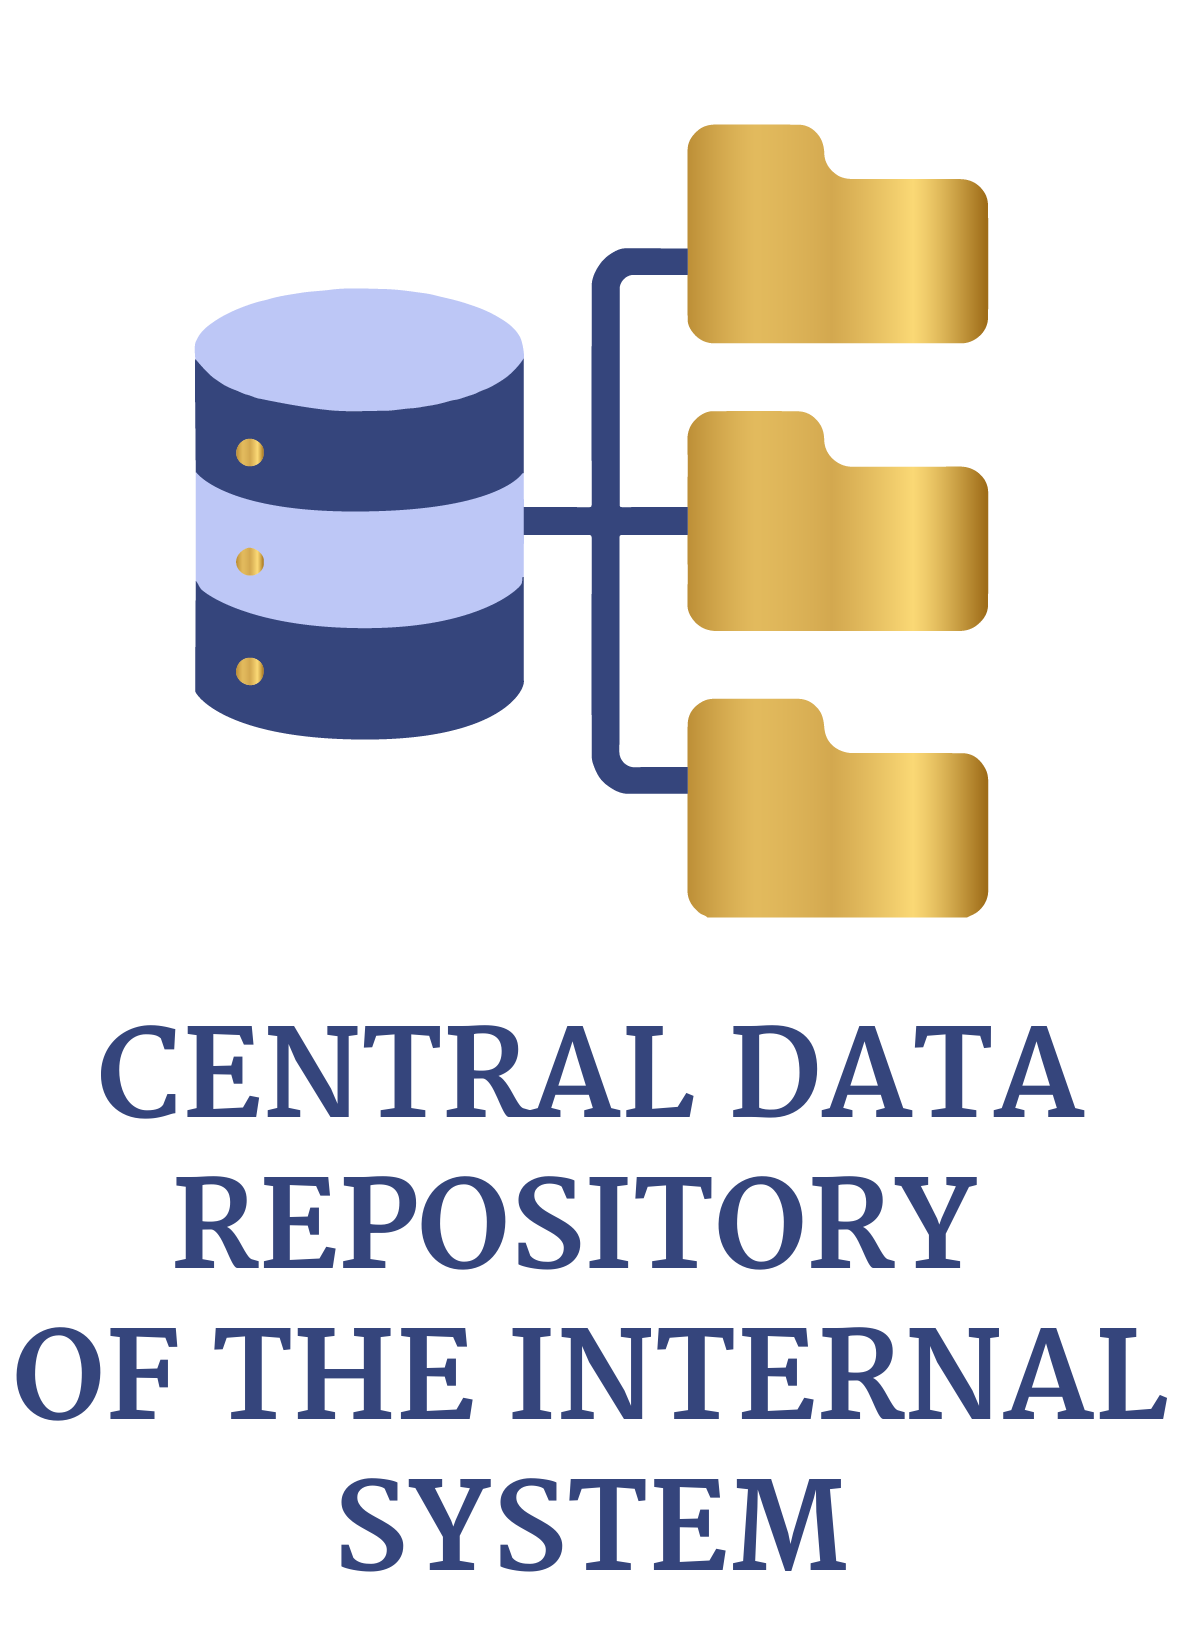 Central data repositoryof the interanl system